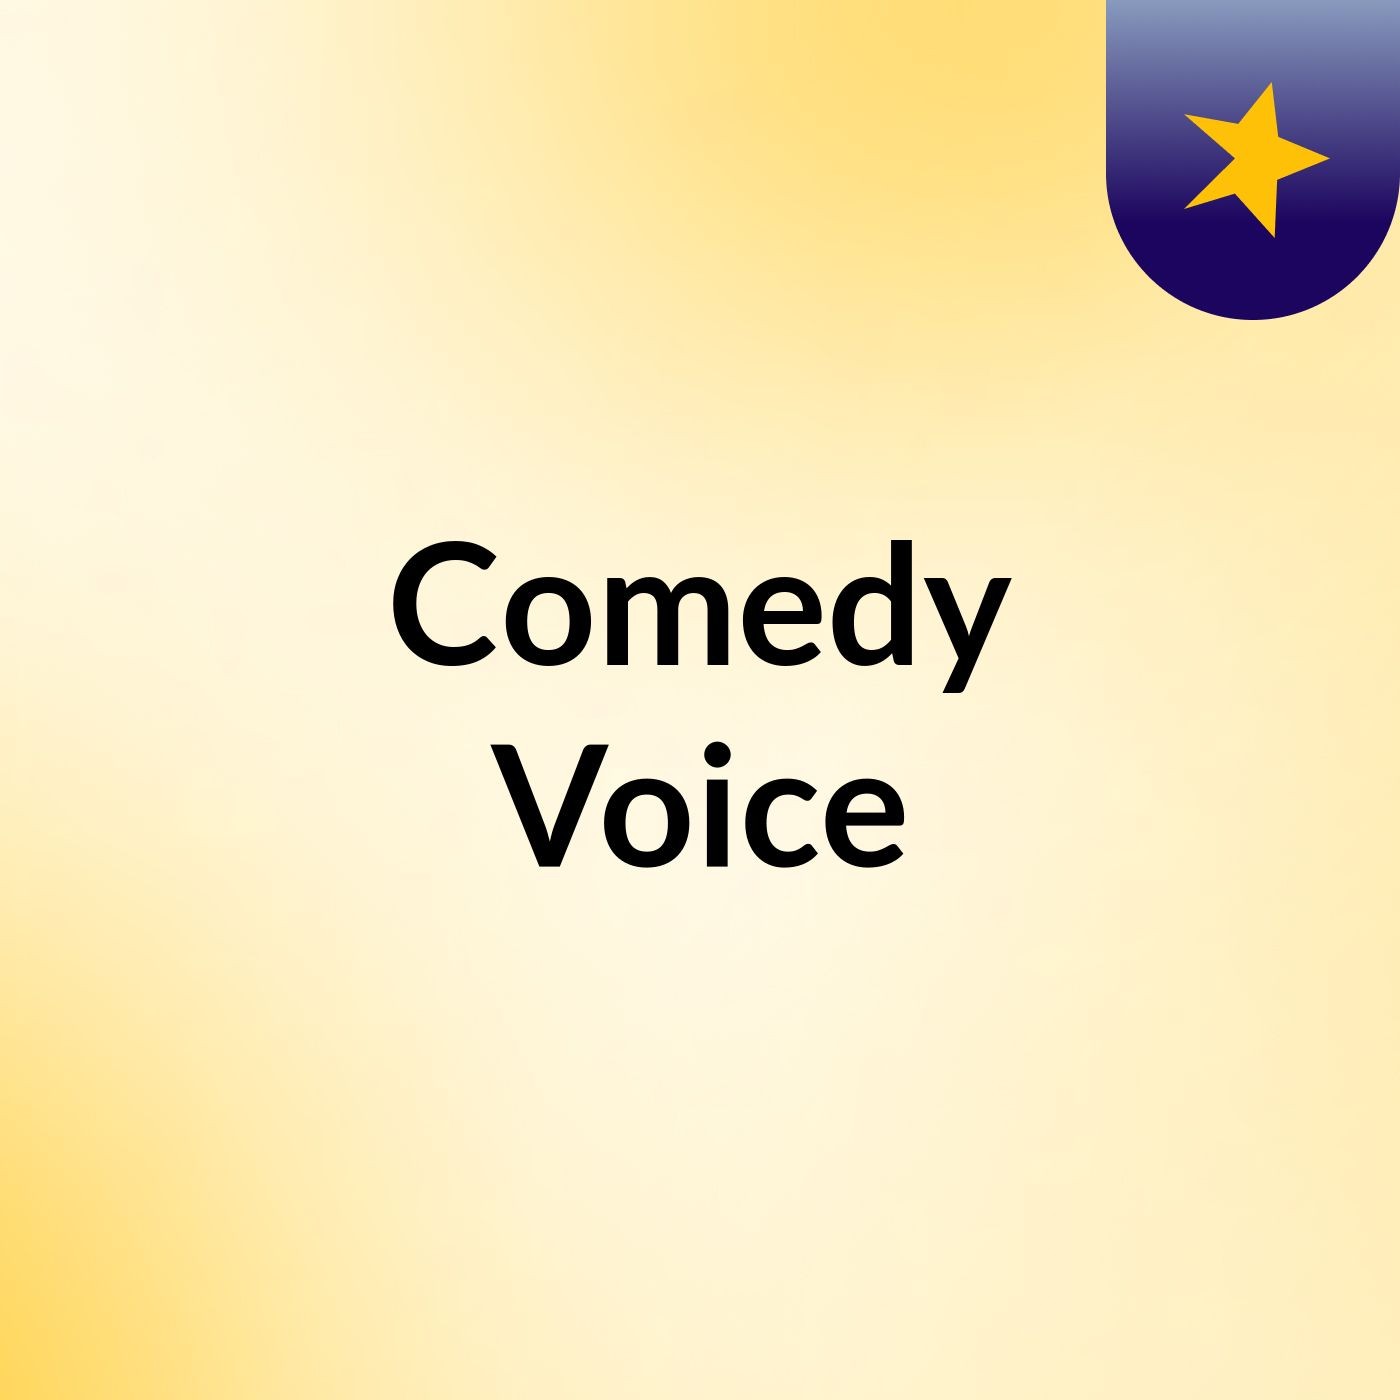 Comedy Voice